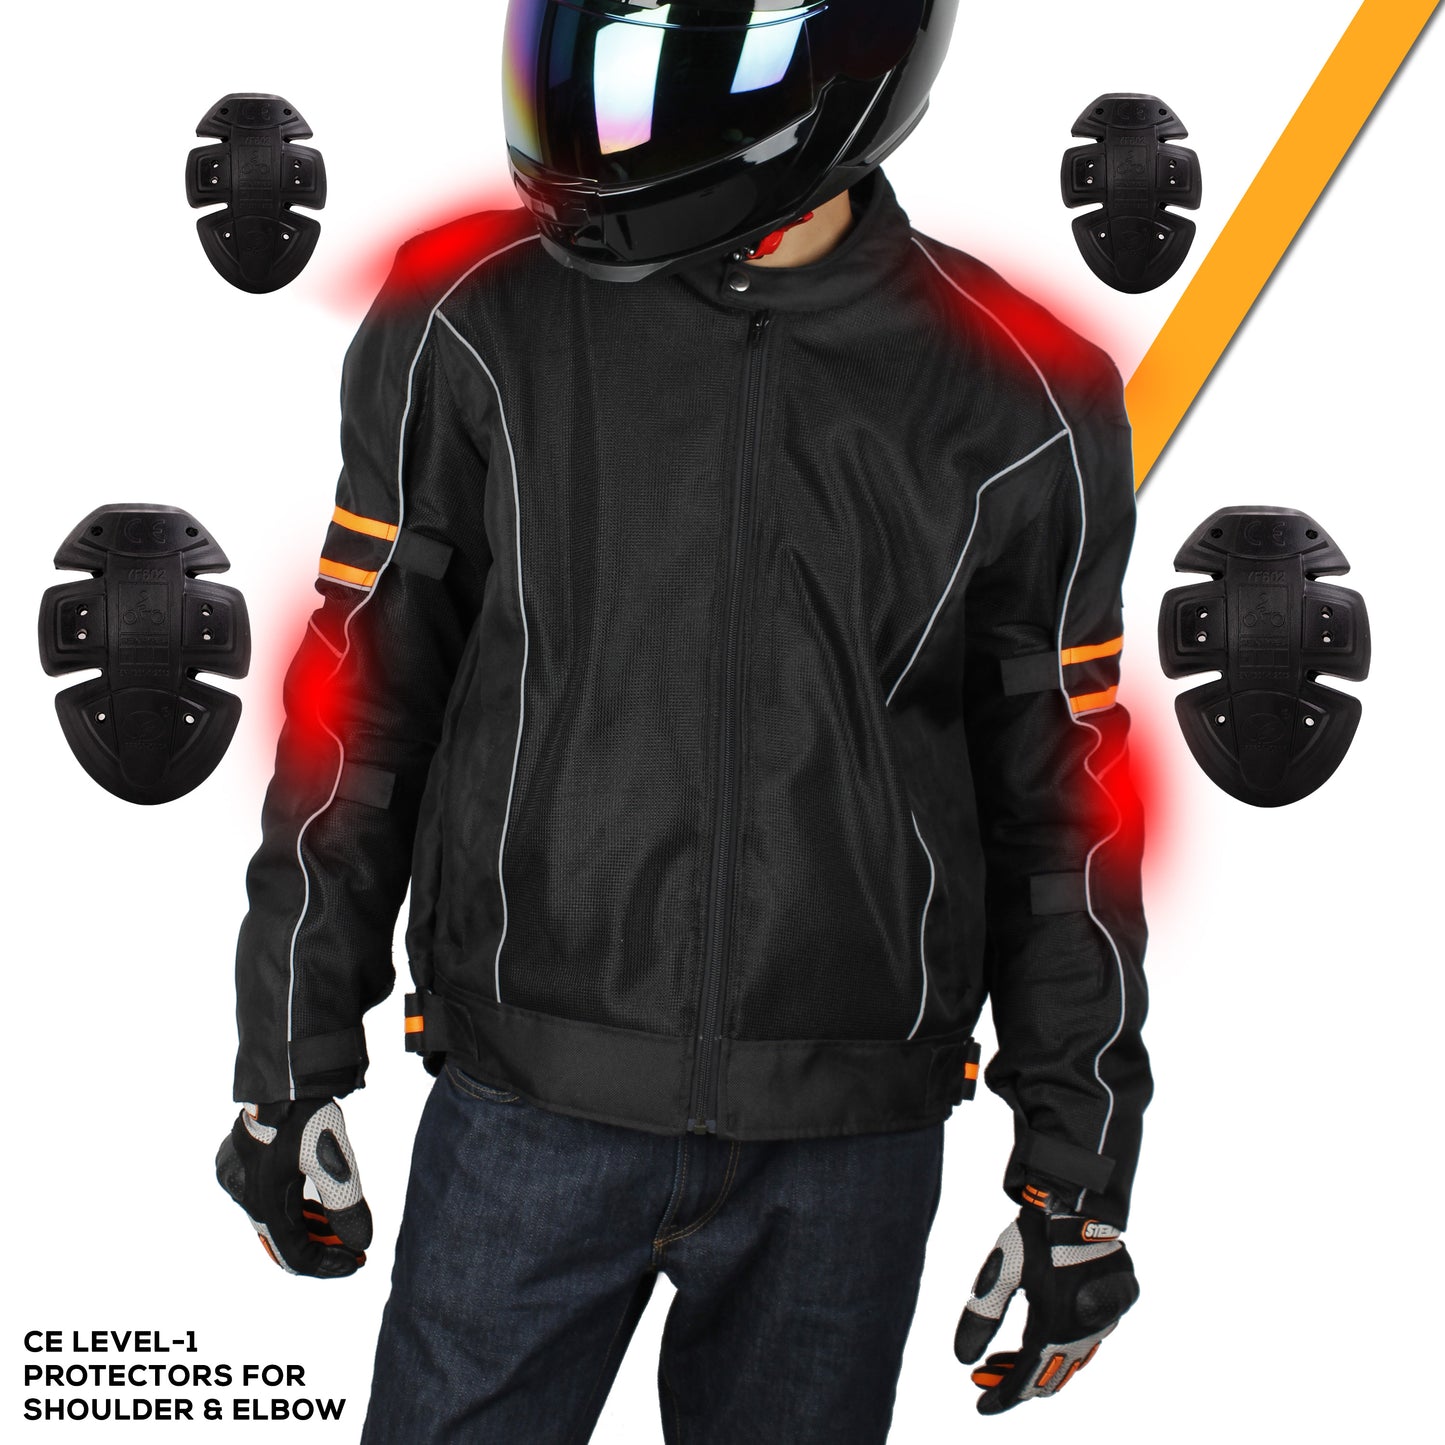 Steelbird Khardungla Riding Jacket with Impact Protection and Abrasion Resistance (Black Orange)